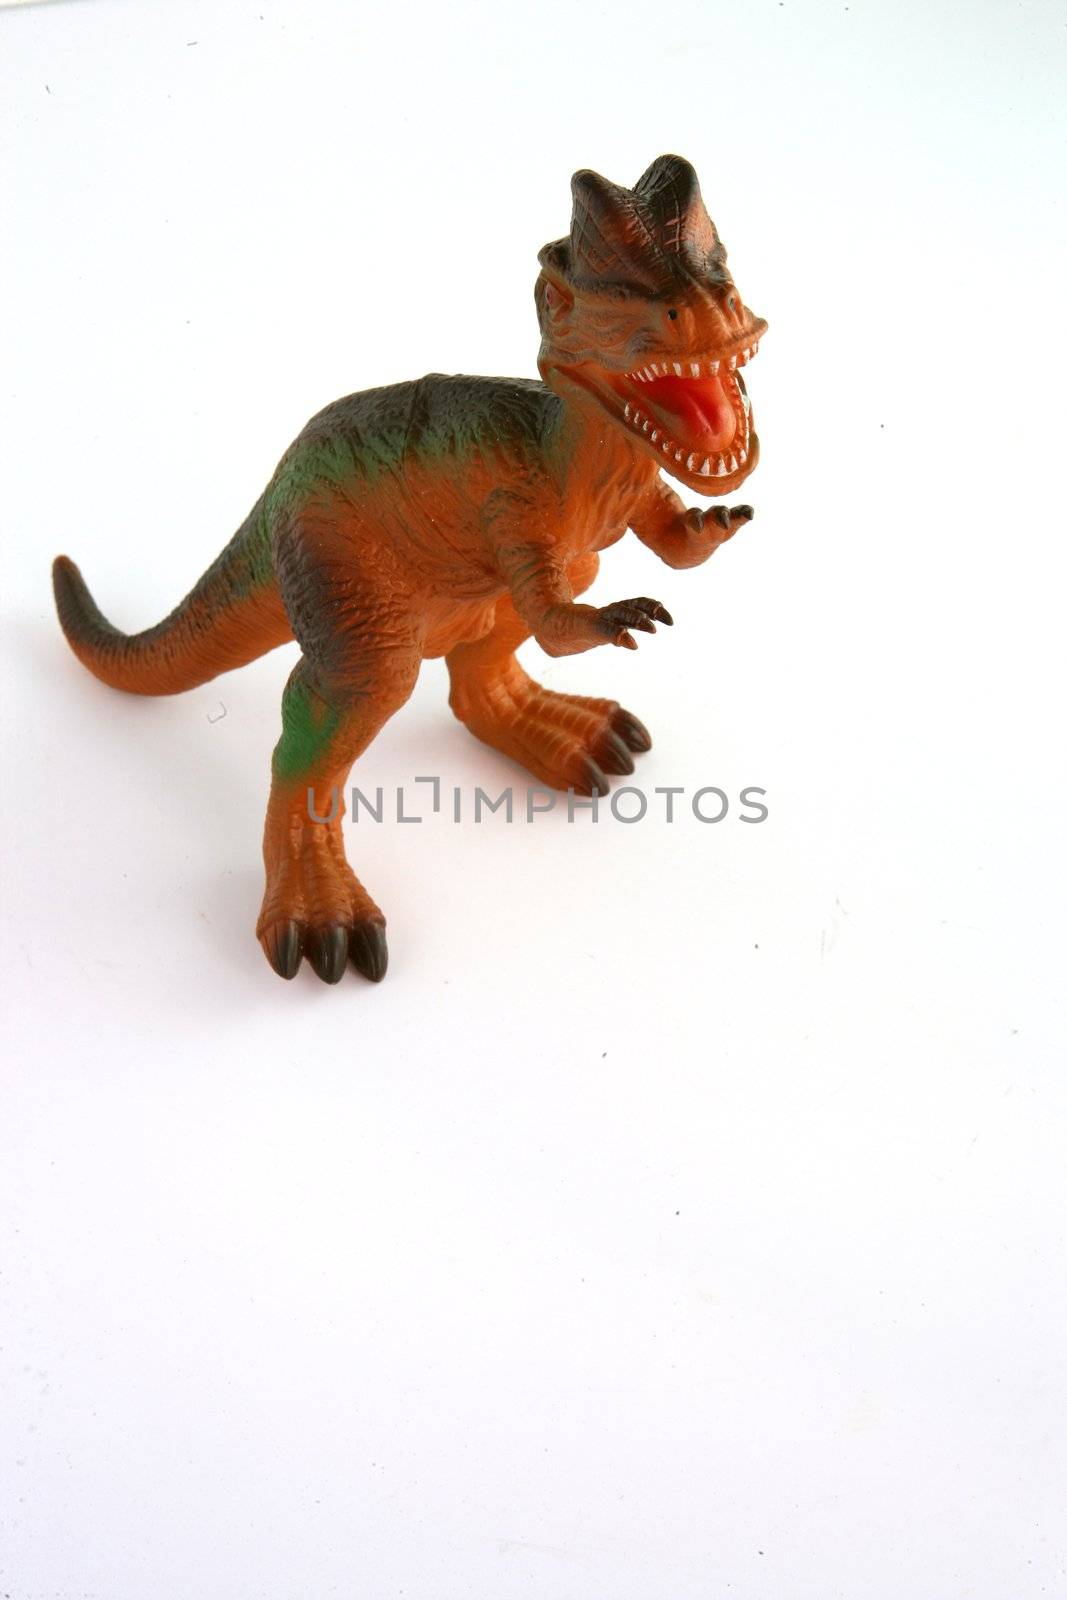 Toy dinosaur by phovoir